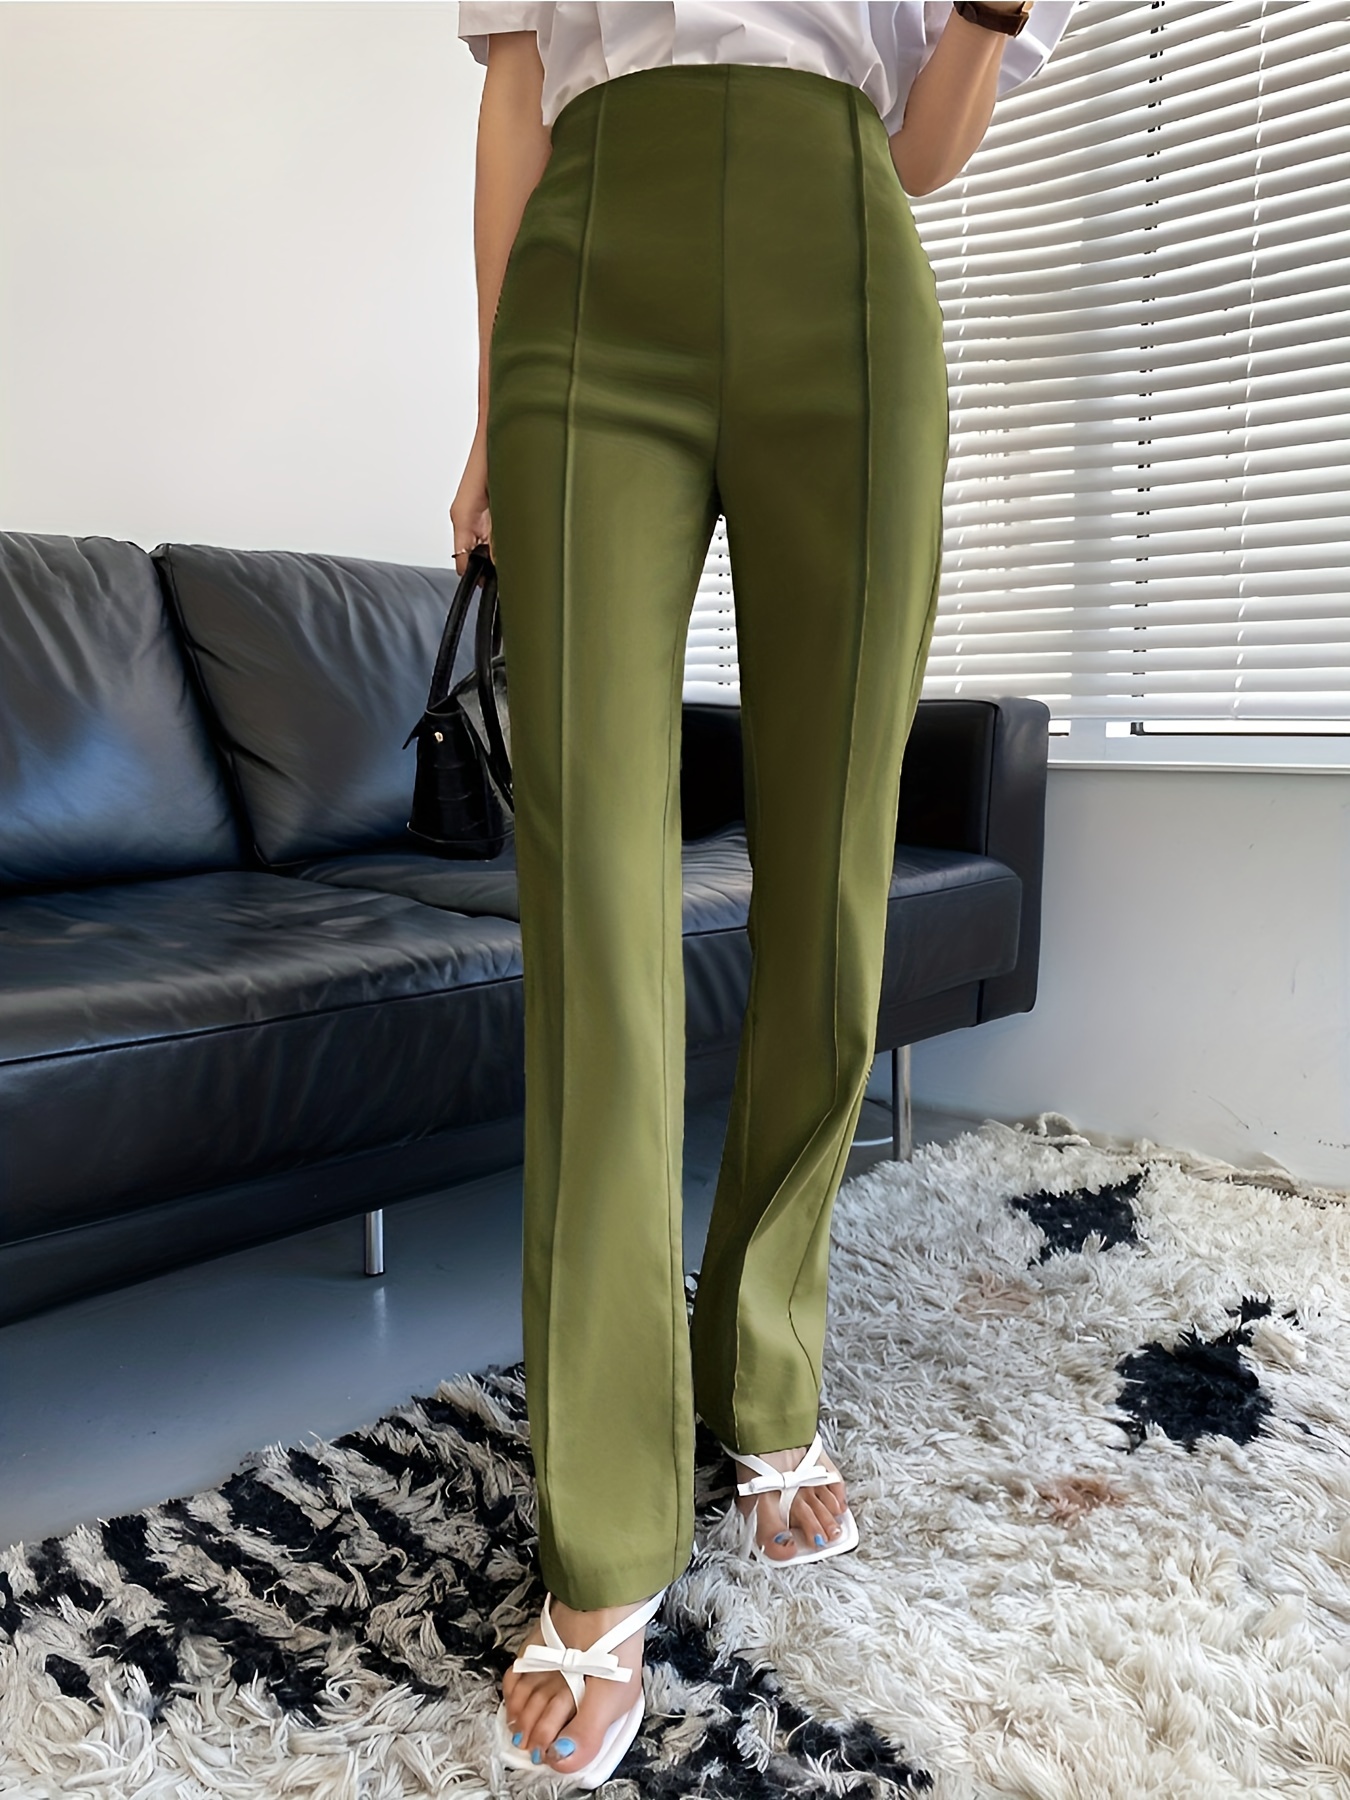 Solid Slim Pintuck Pants, Casual High Waist Pants, Women's Clothing